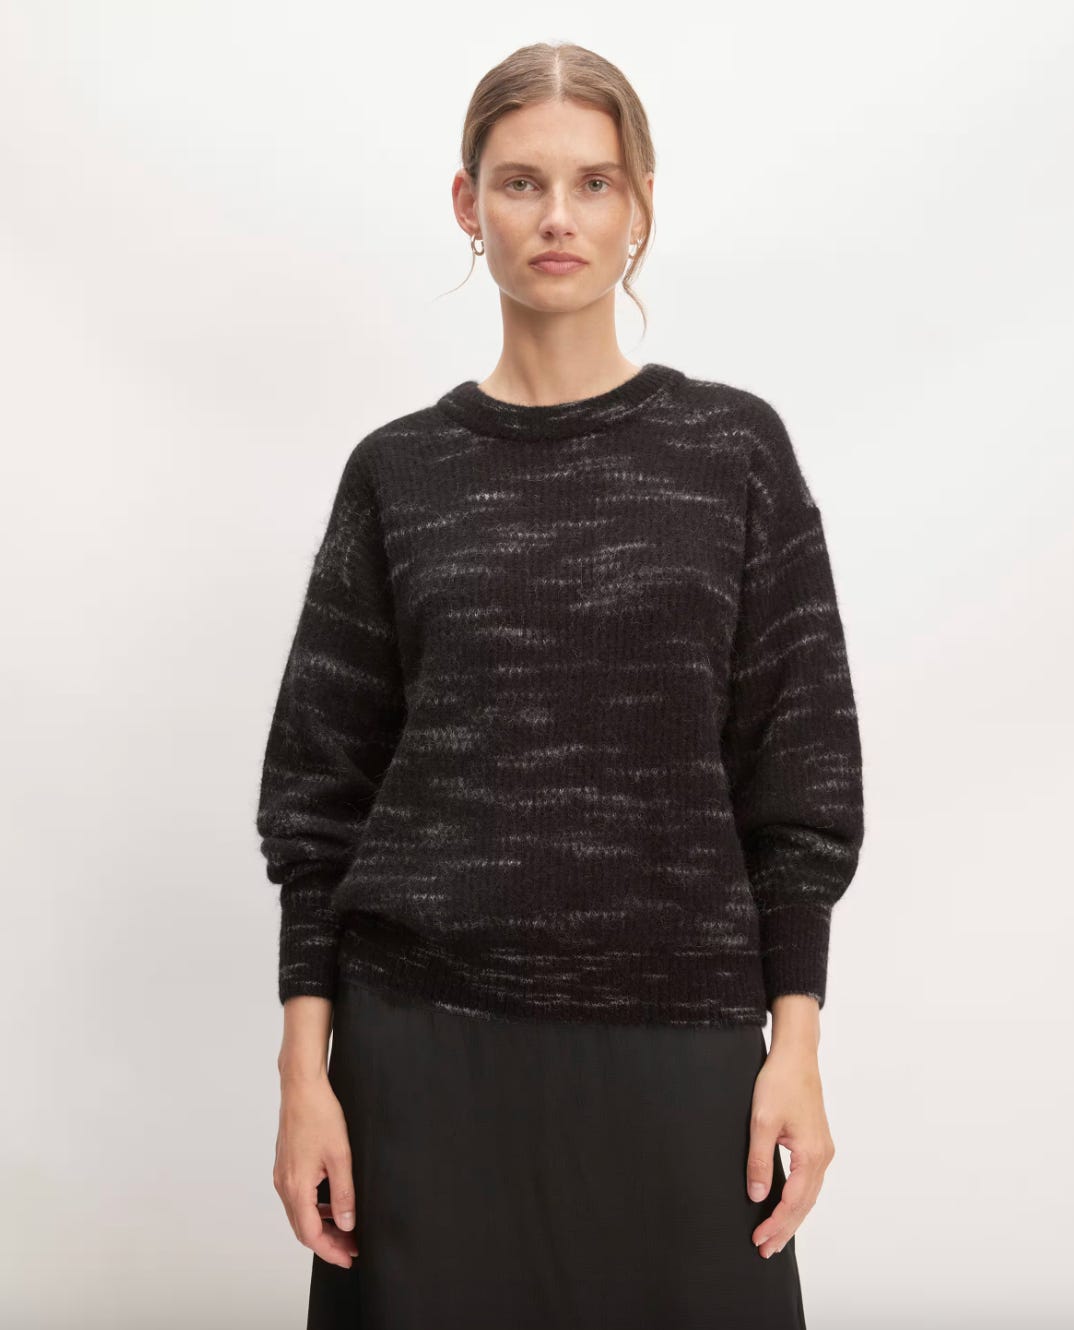 GOACA classics: The crewneck sweater - by Kim France